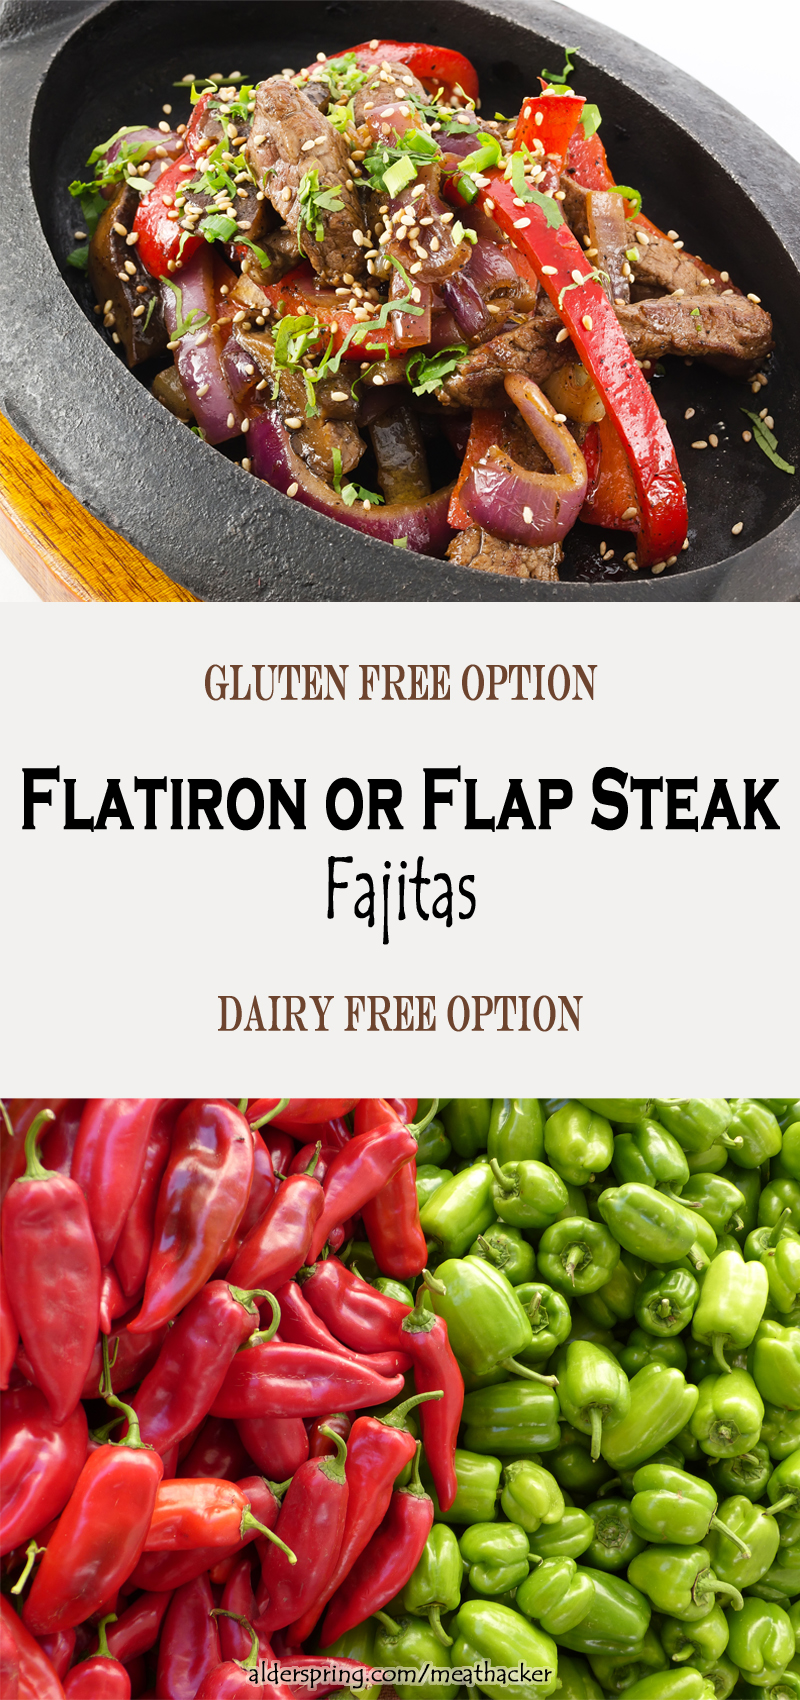 Flatiron or Flap Steak Fajitas